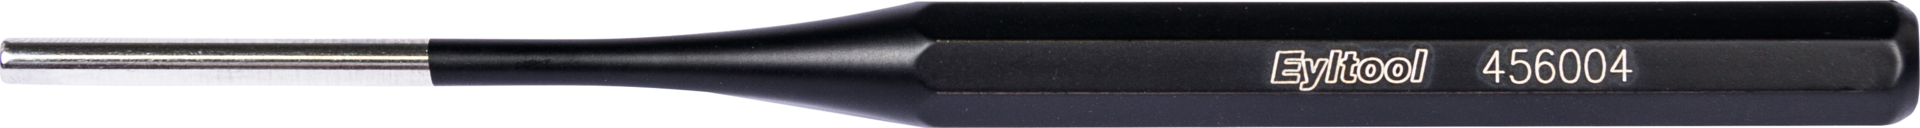 Splinttreiber achtkantig mit HandschutzL150mm D8mm